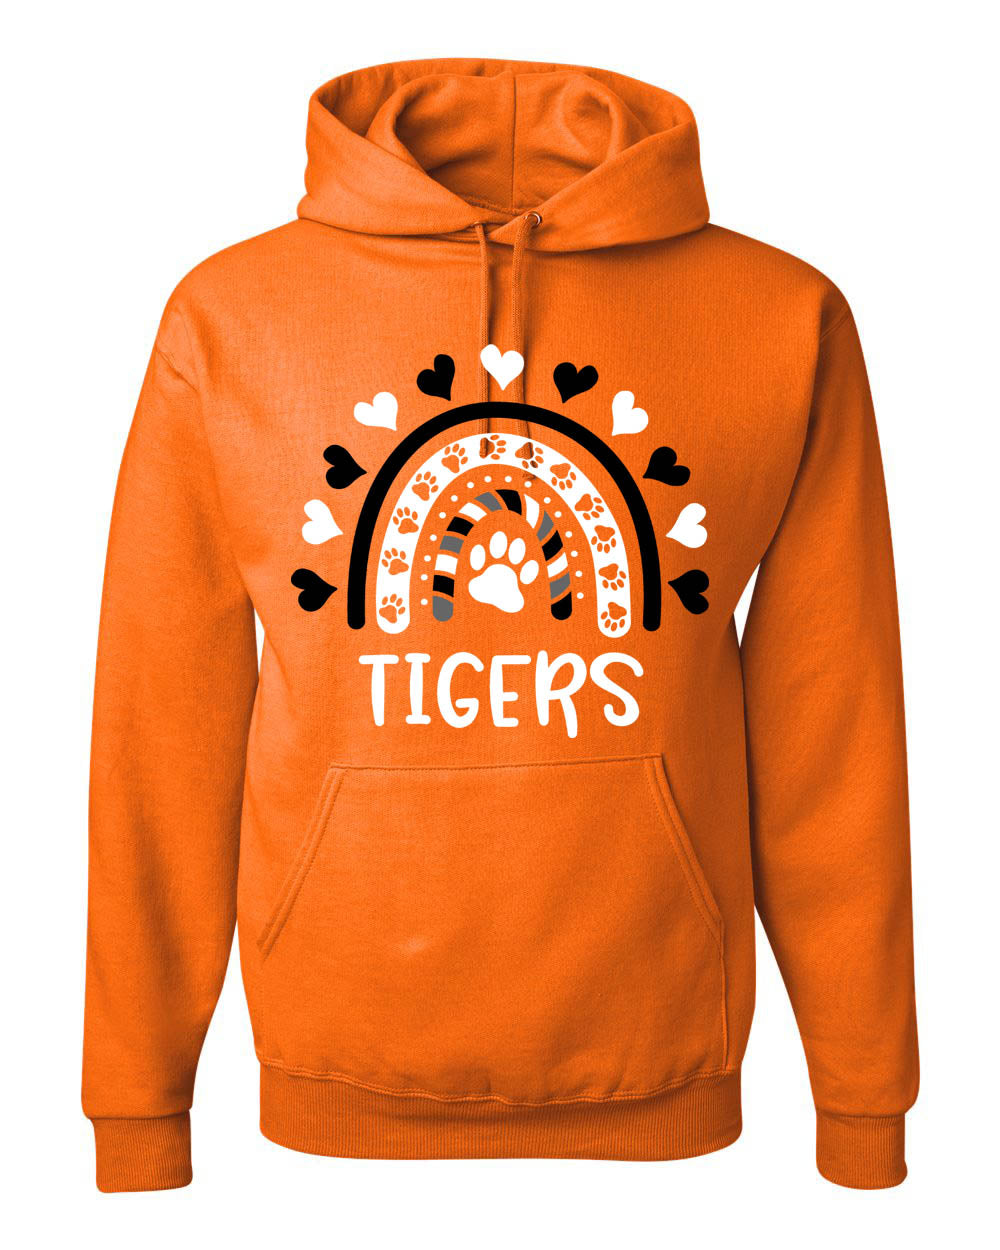 Tigers design 4 Hooded Sweatshirt, Orange